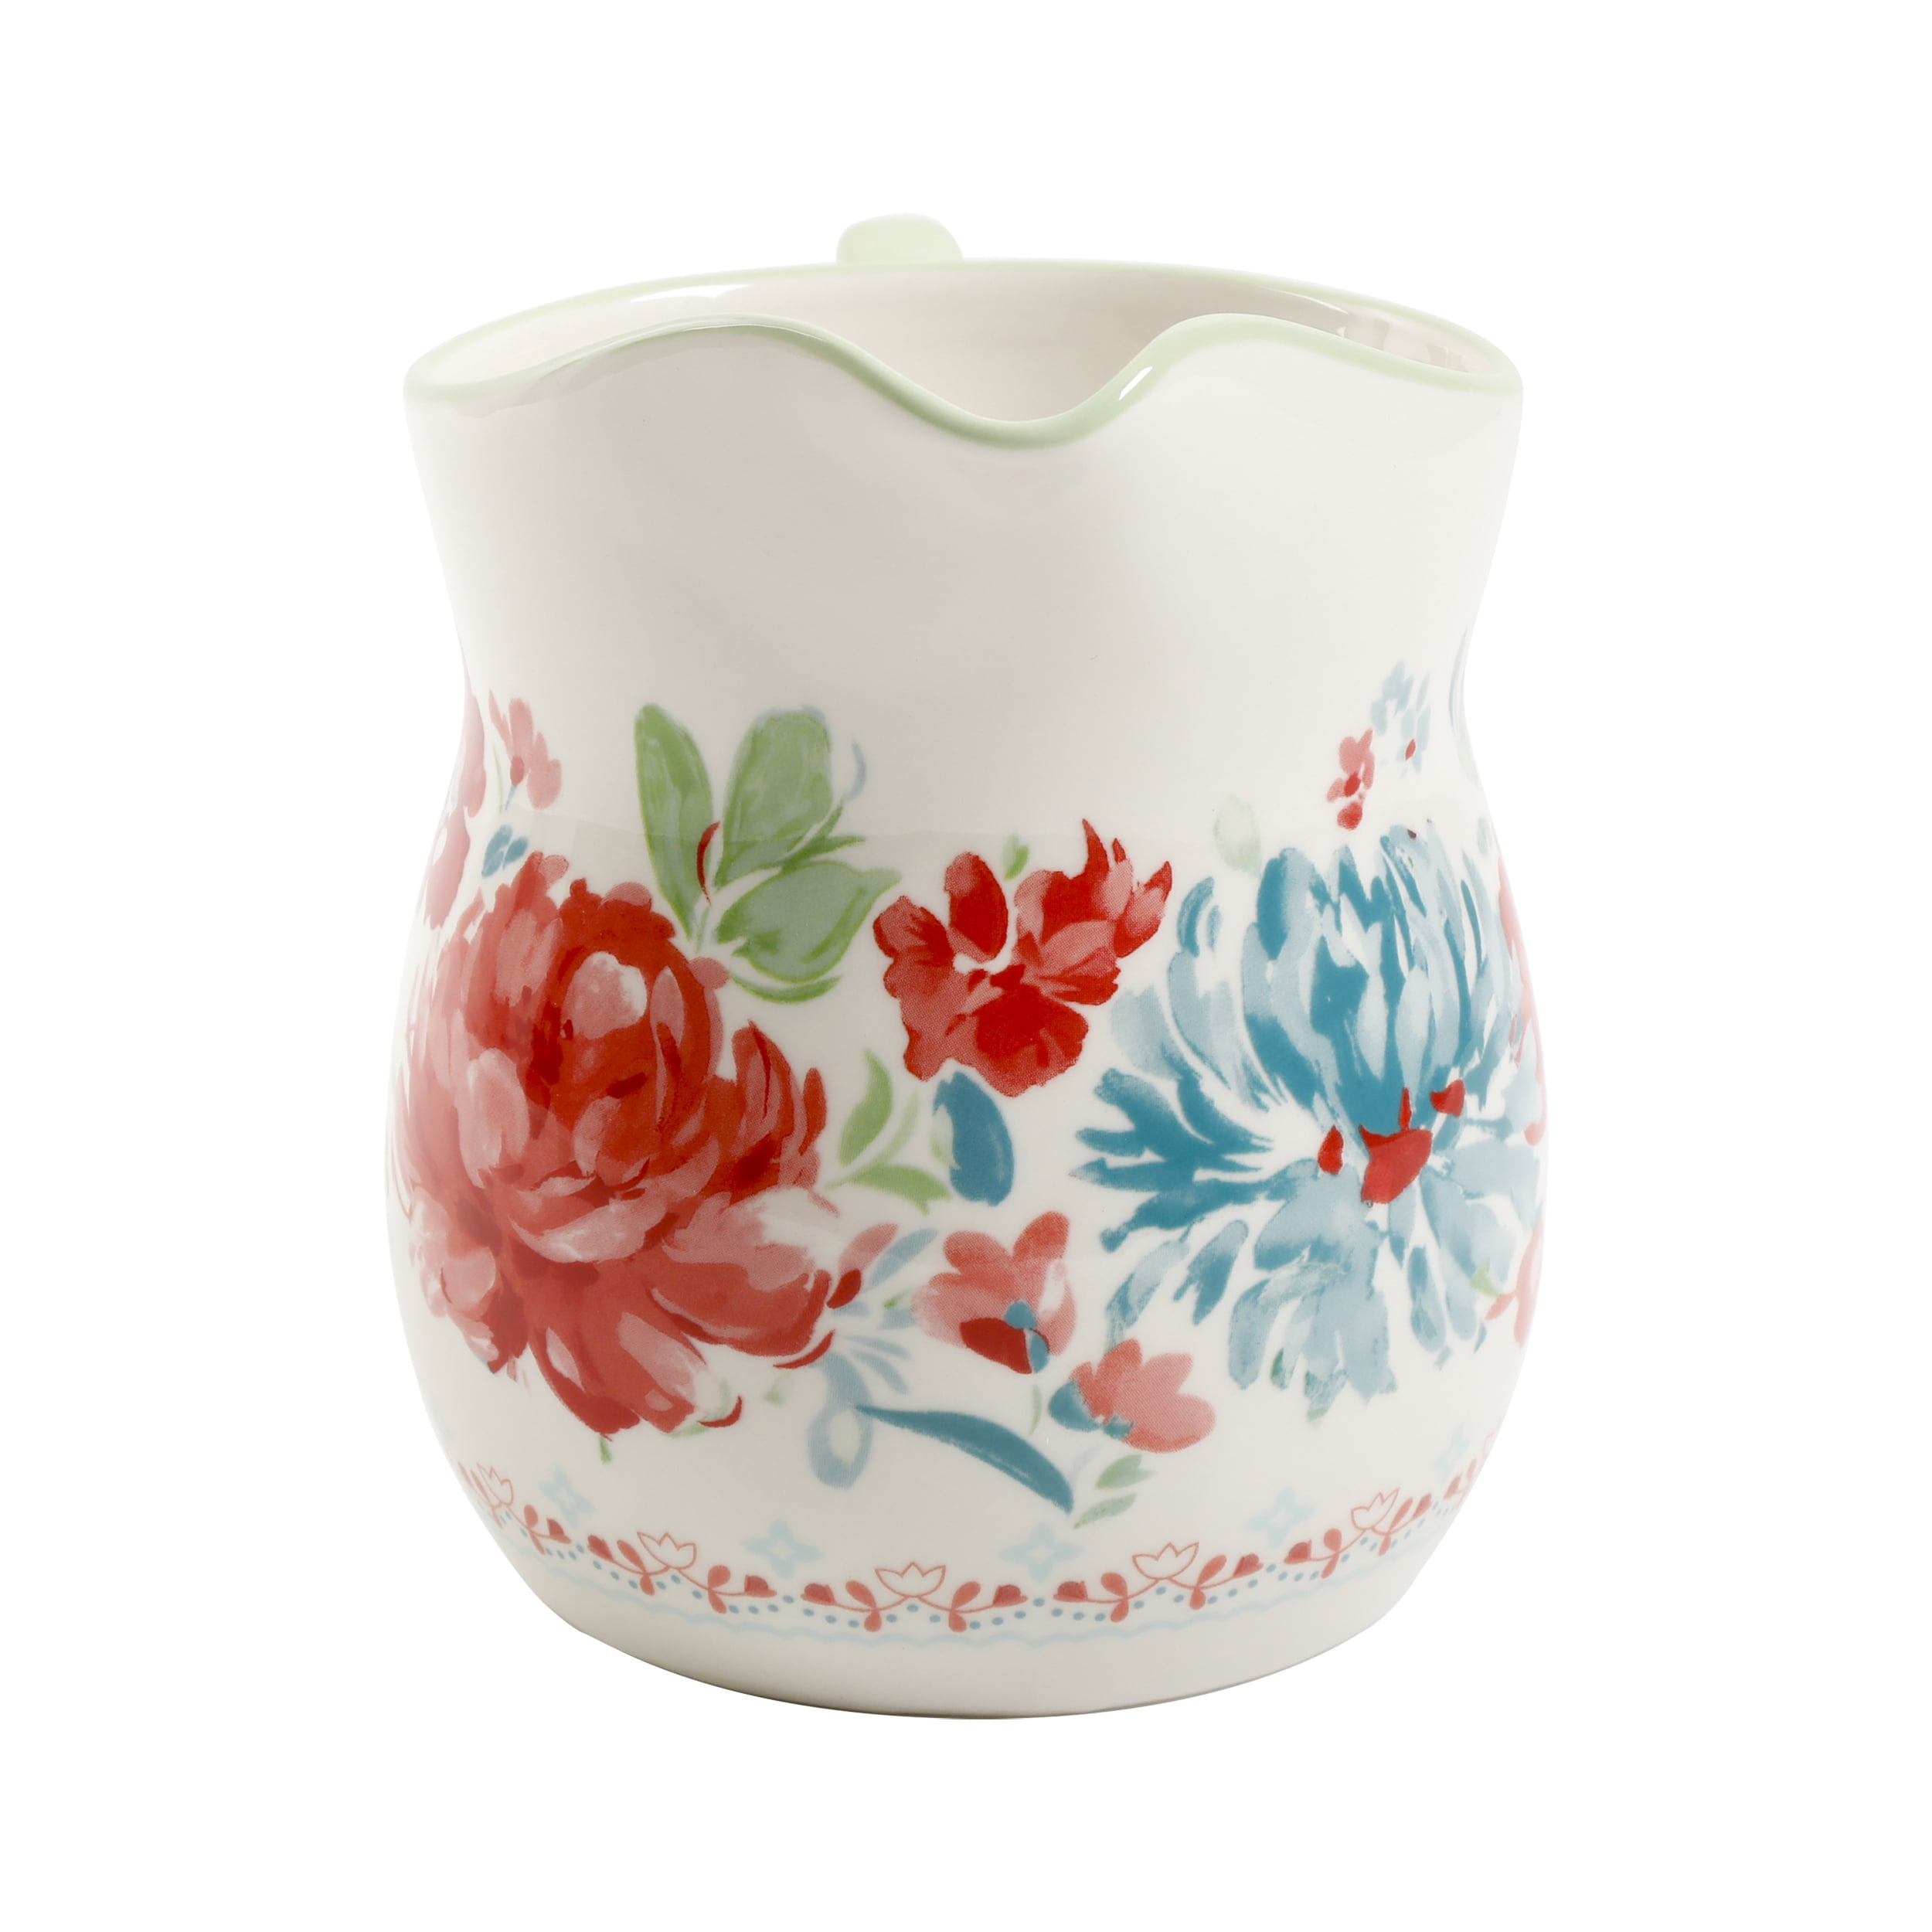 🌻New Pioneer Woman Vintage Floral Measuring Bowls, 4 Piece - Stoneware,  Baking